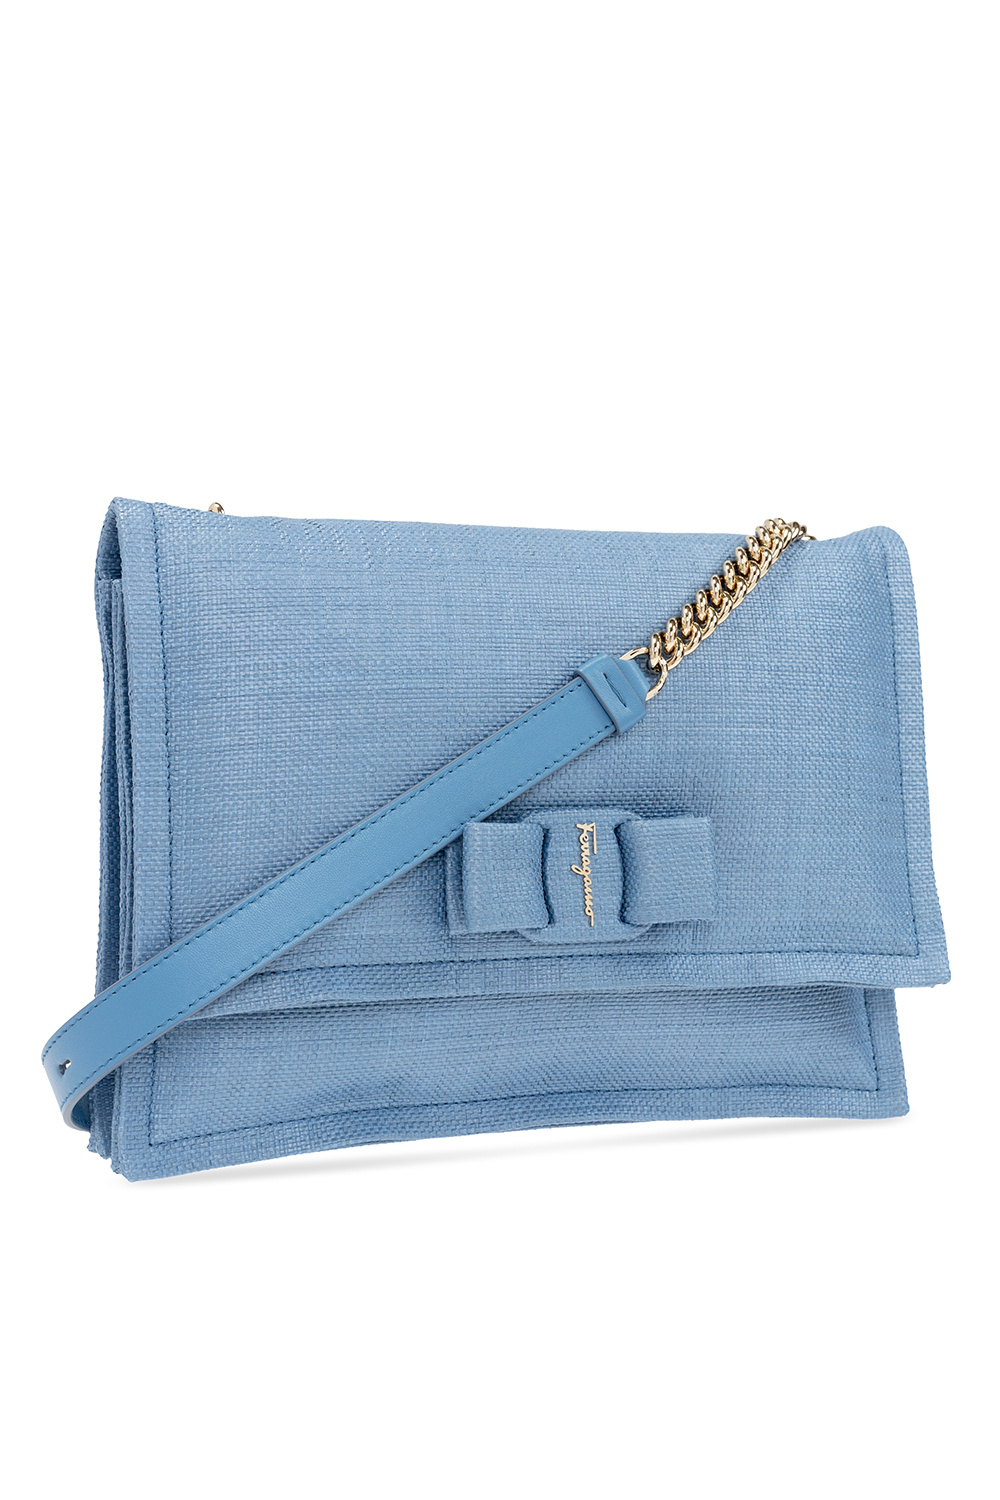 Salvatore Ferragamo 'Viva Bow' shoulder bag | Women's Bags | Vitkac